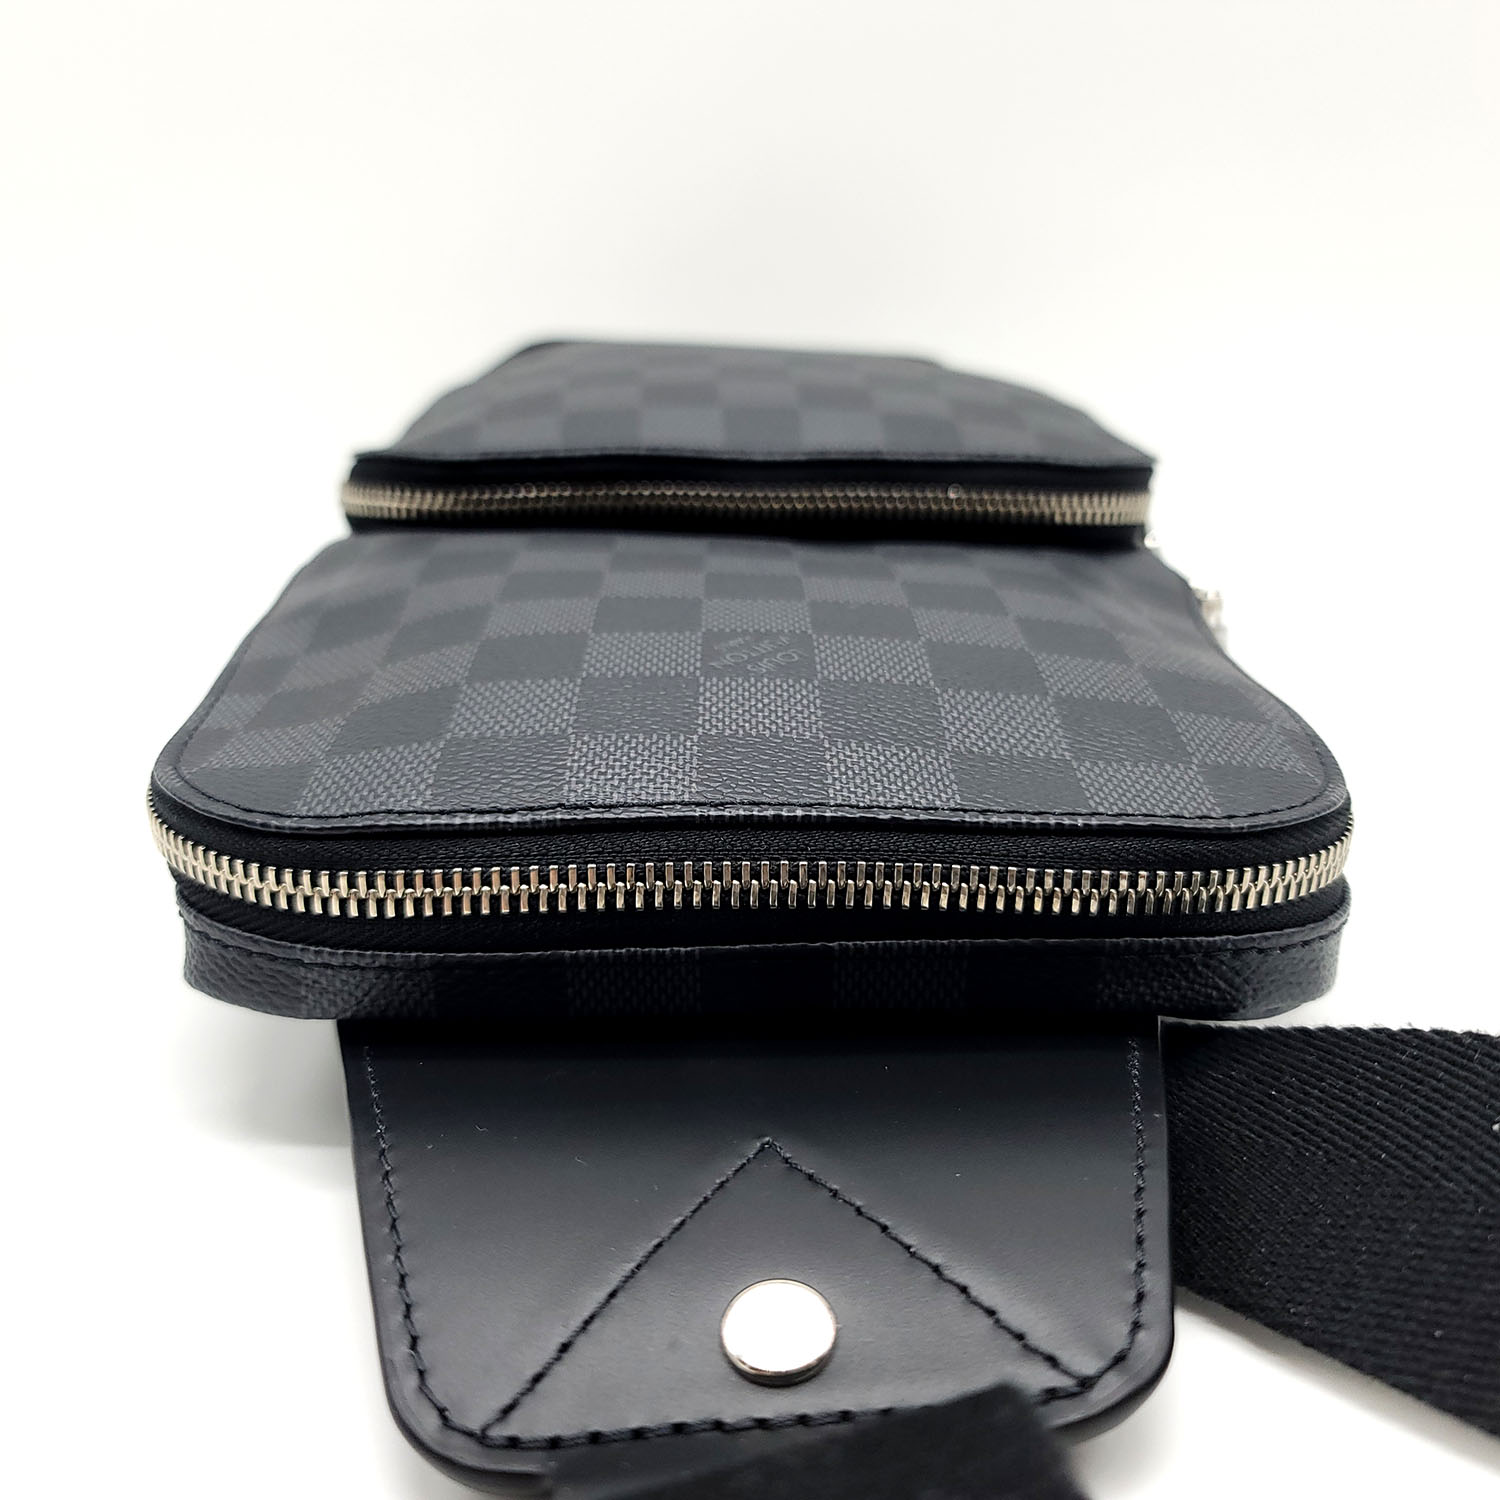 Louis Vuitton Graphite Damier Canvas Avenue Sling Backpack – On